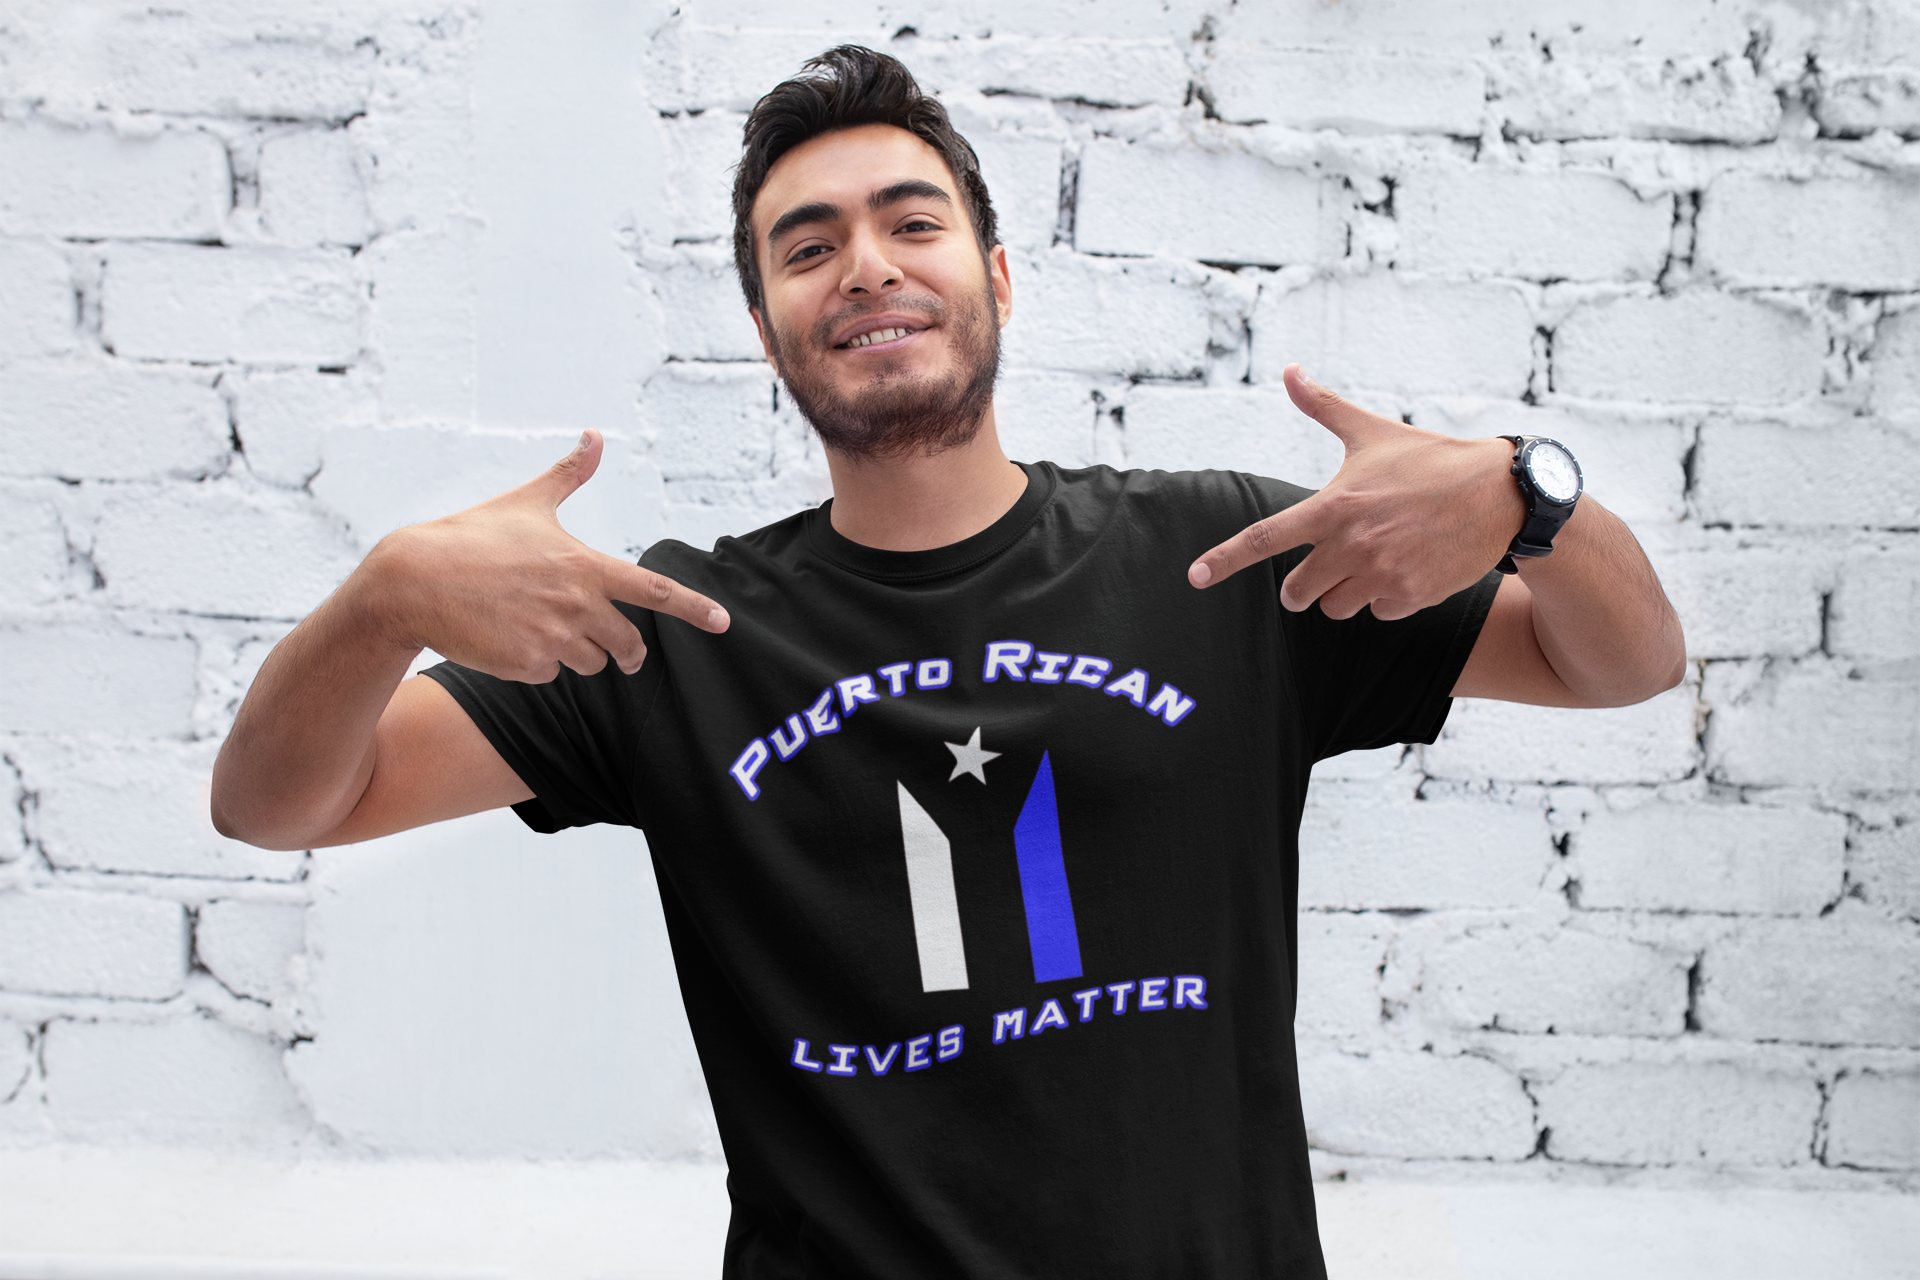 Puerto Rican Lives Matter Shirt. - Drop Top Teez